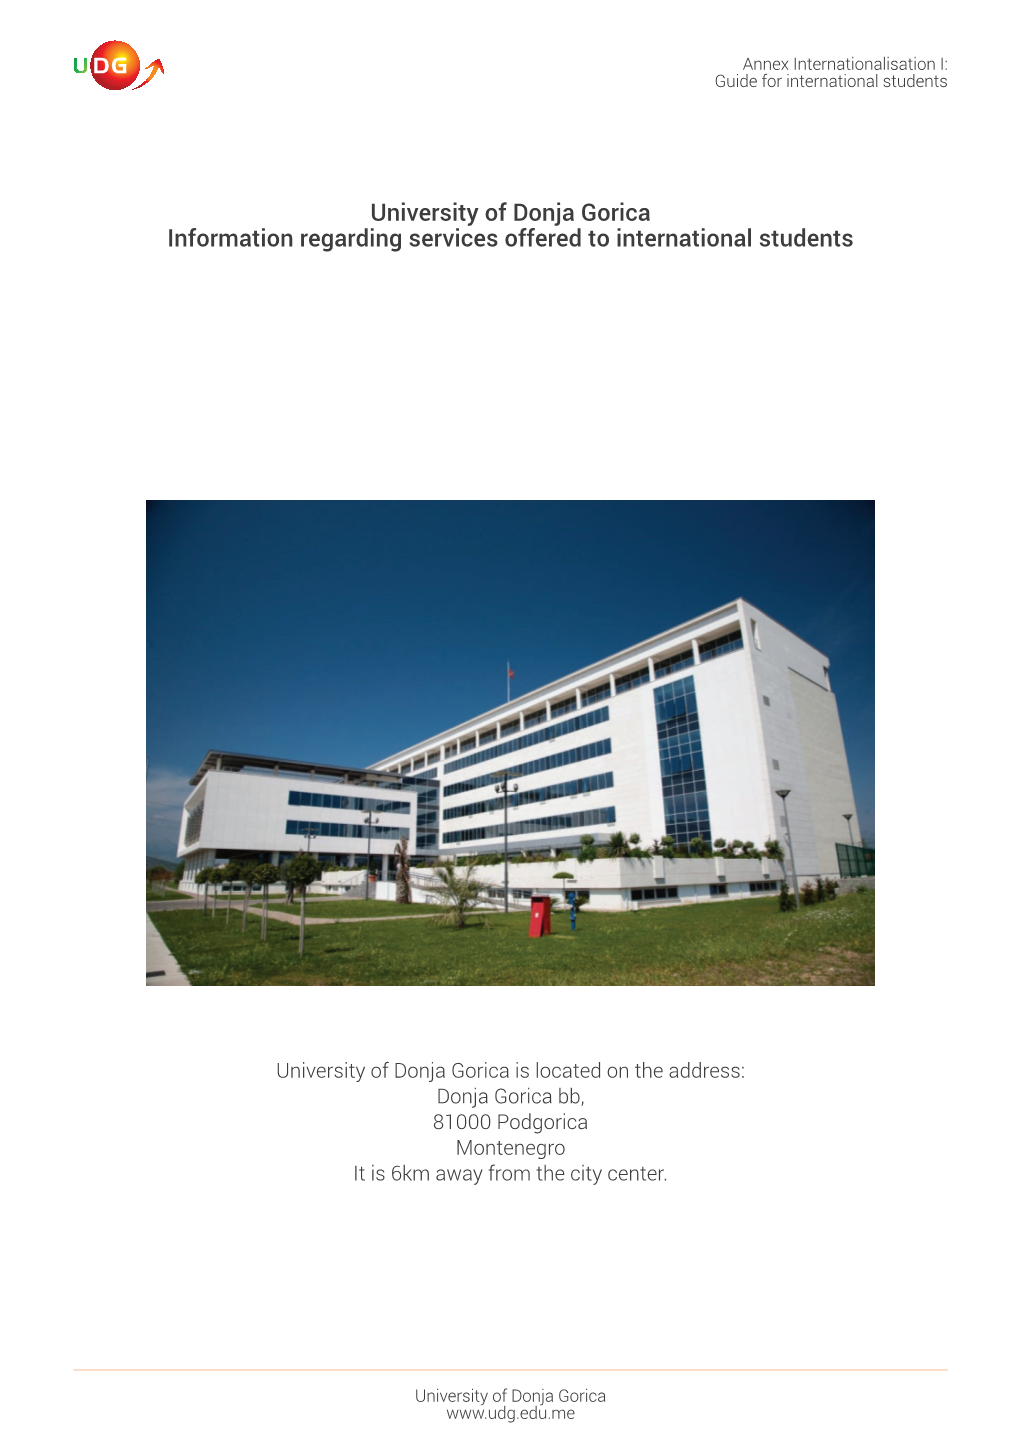 University of Donja Gorica Information Regarding Services Offered to International Students